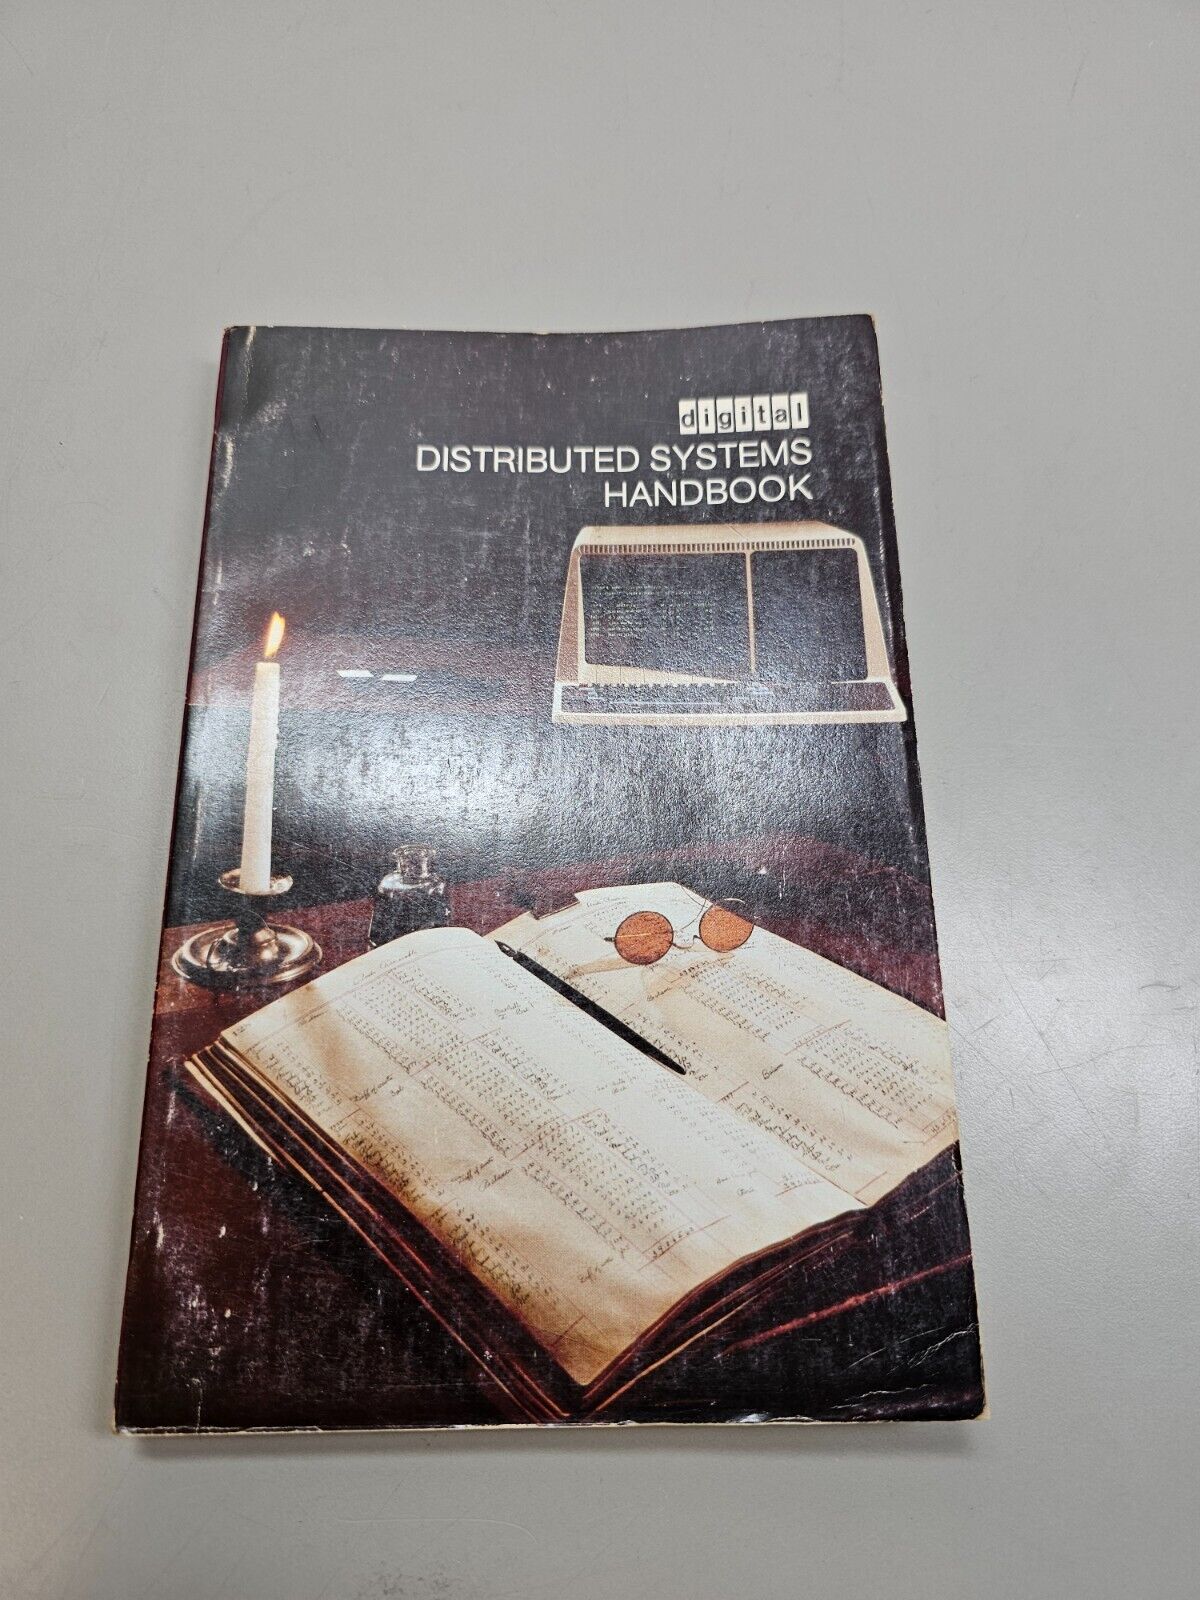 Rare Vintage 1978 Digital DEC Distributed Systems Handbook